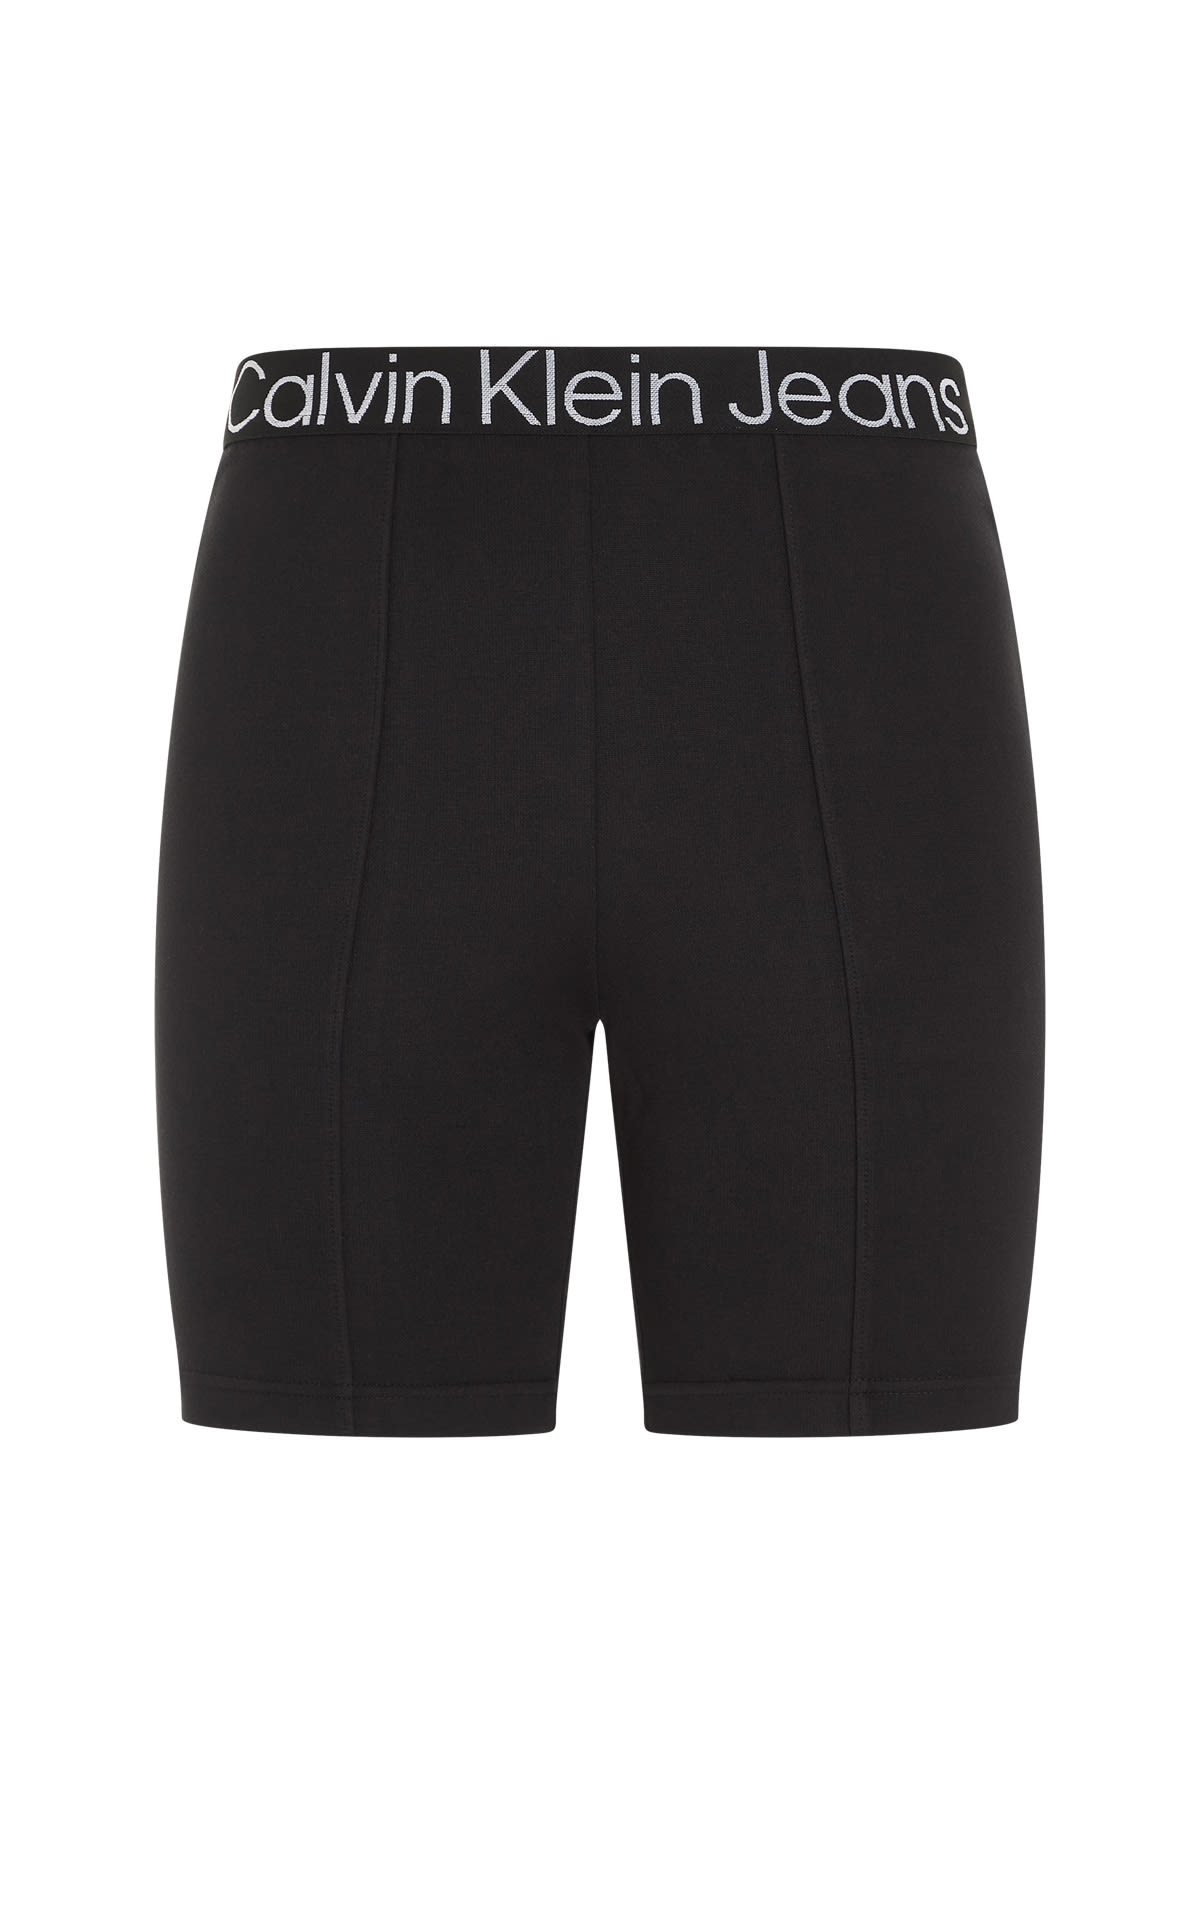 Black cycling shorts CK Jeans